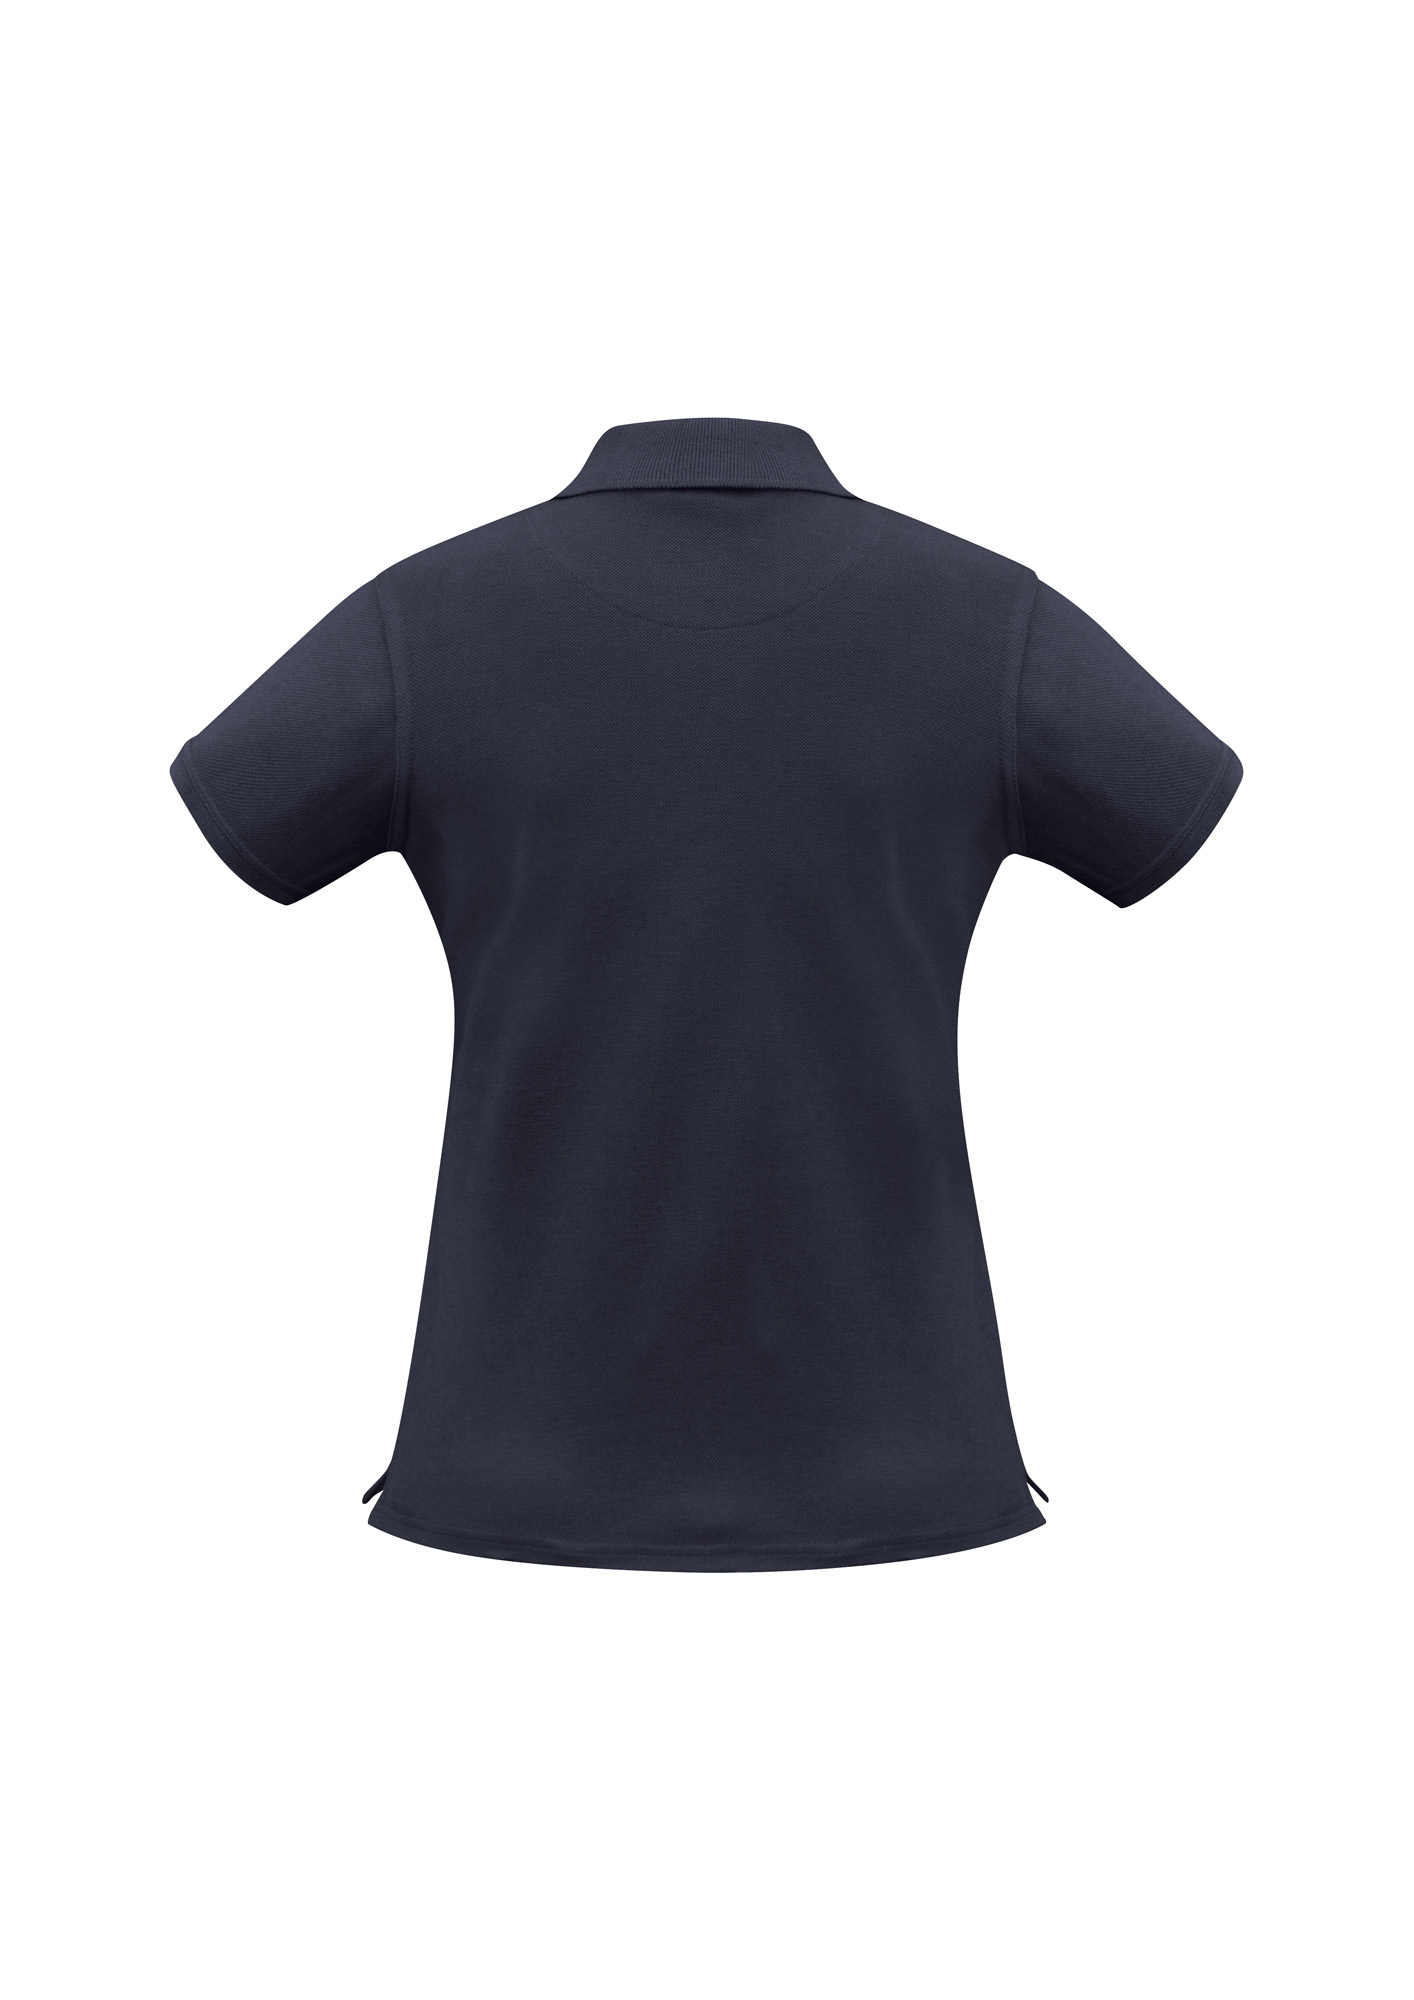 Women's Neon Polo T-Shirts - Navy | The Uniform Edit